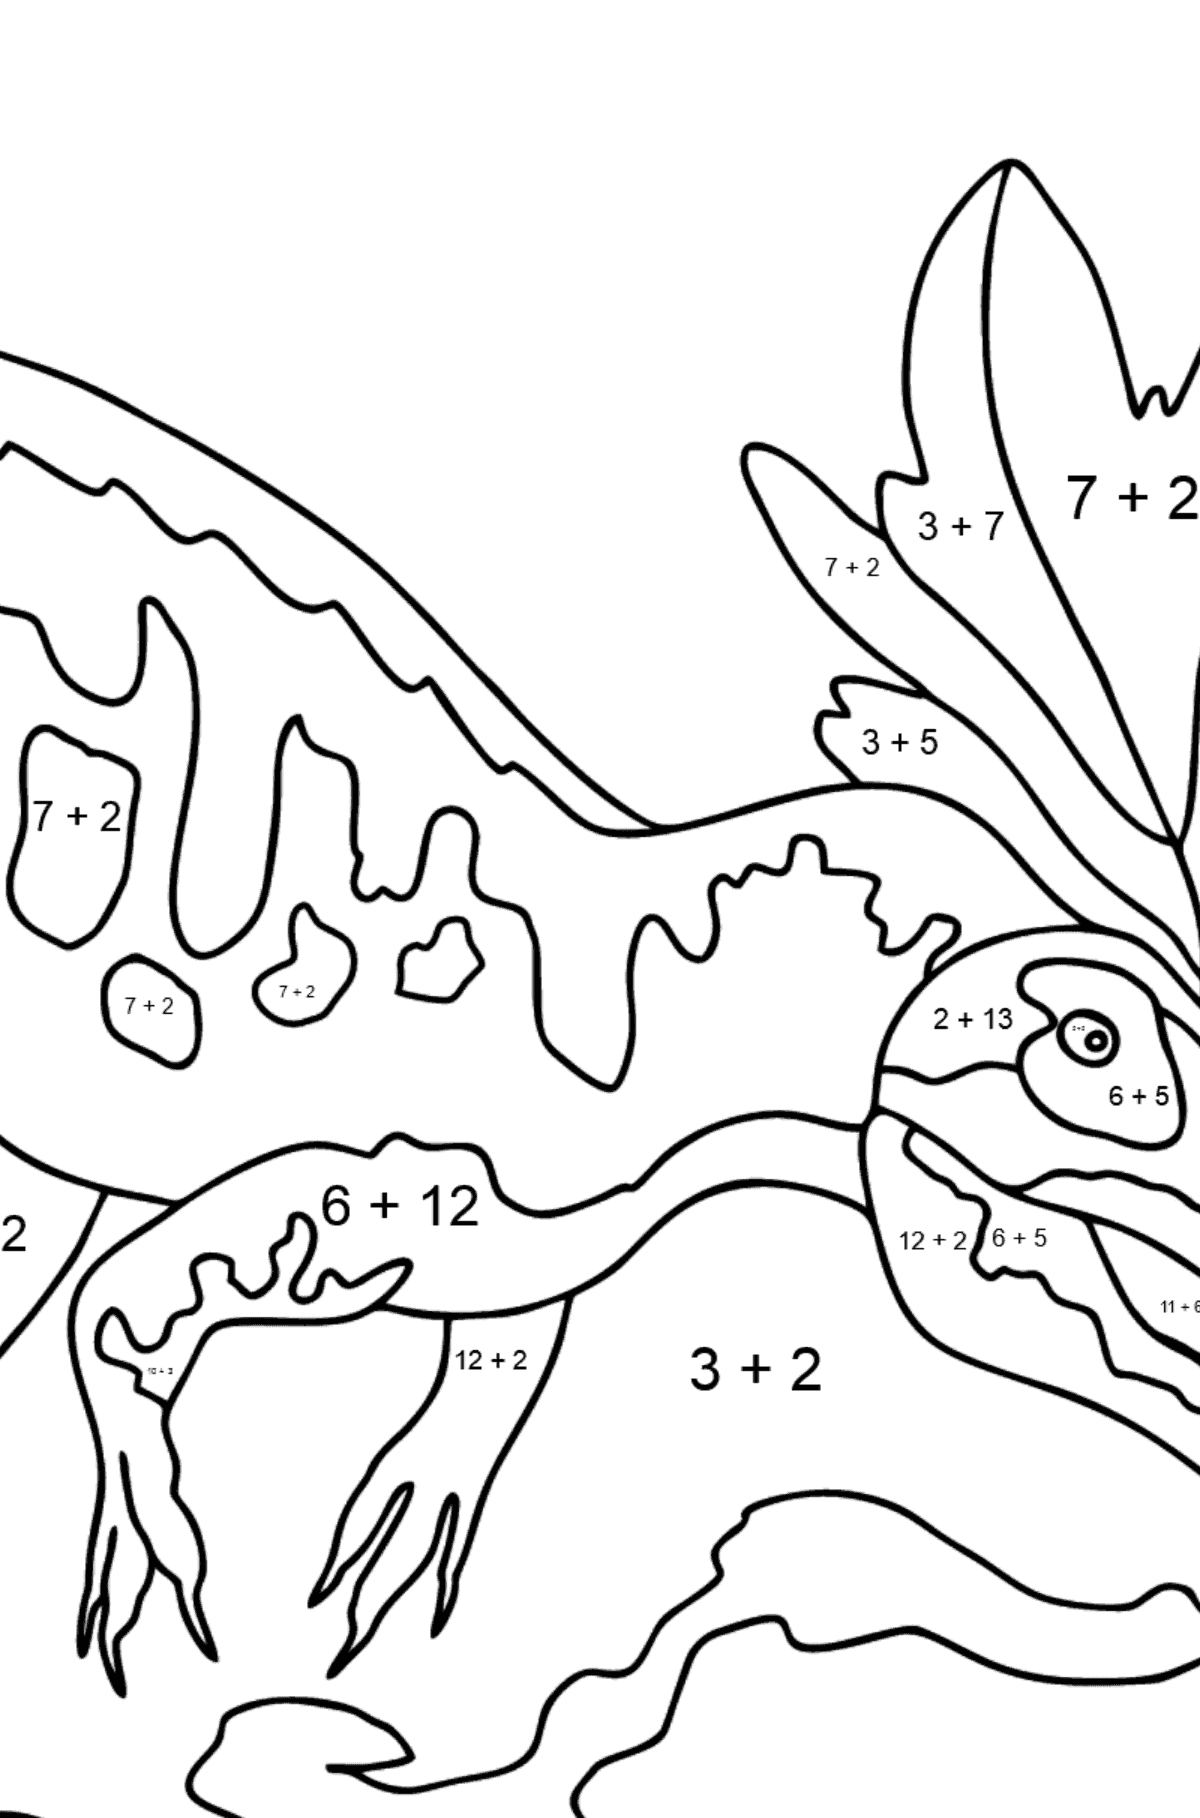 Dibujo para colorear de alosaurio (difícil) - Colorear con Matemáticas - Sumas para Niños